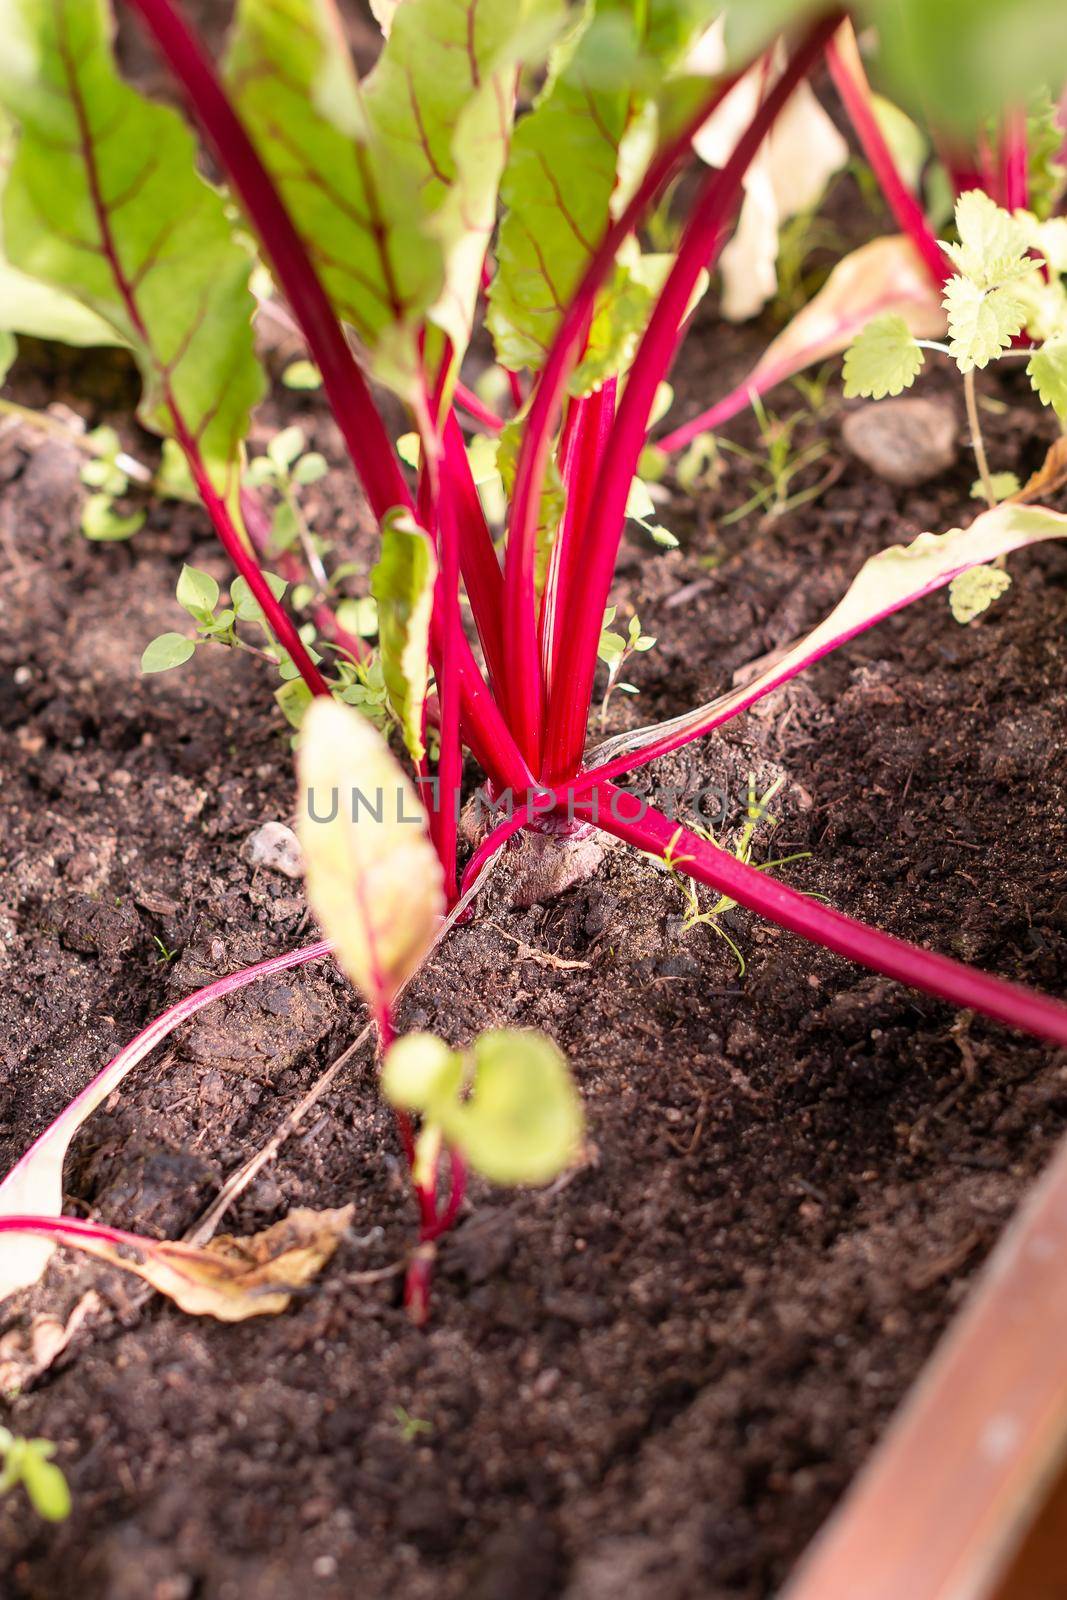 Red beetroot planted in summer garden. Growing organic beet vegetables